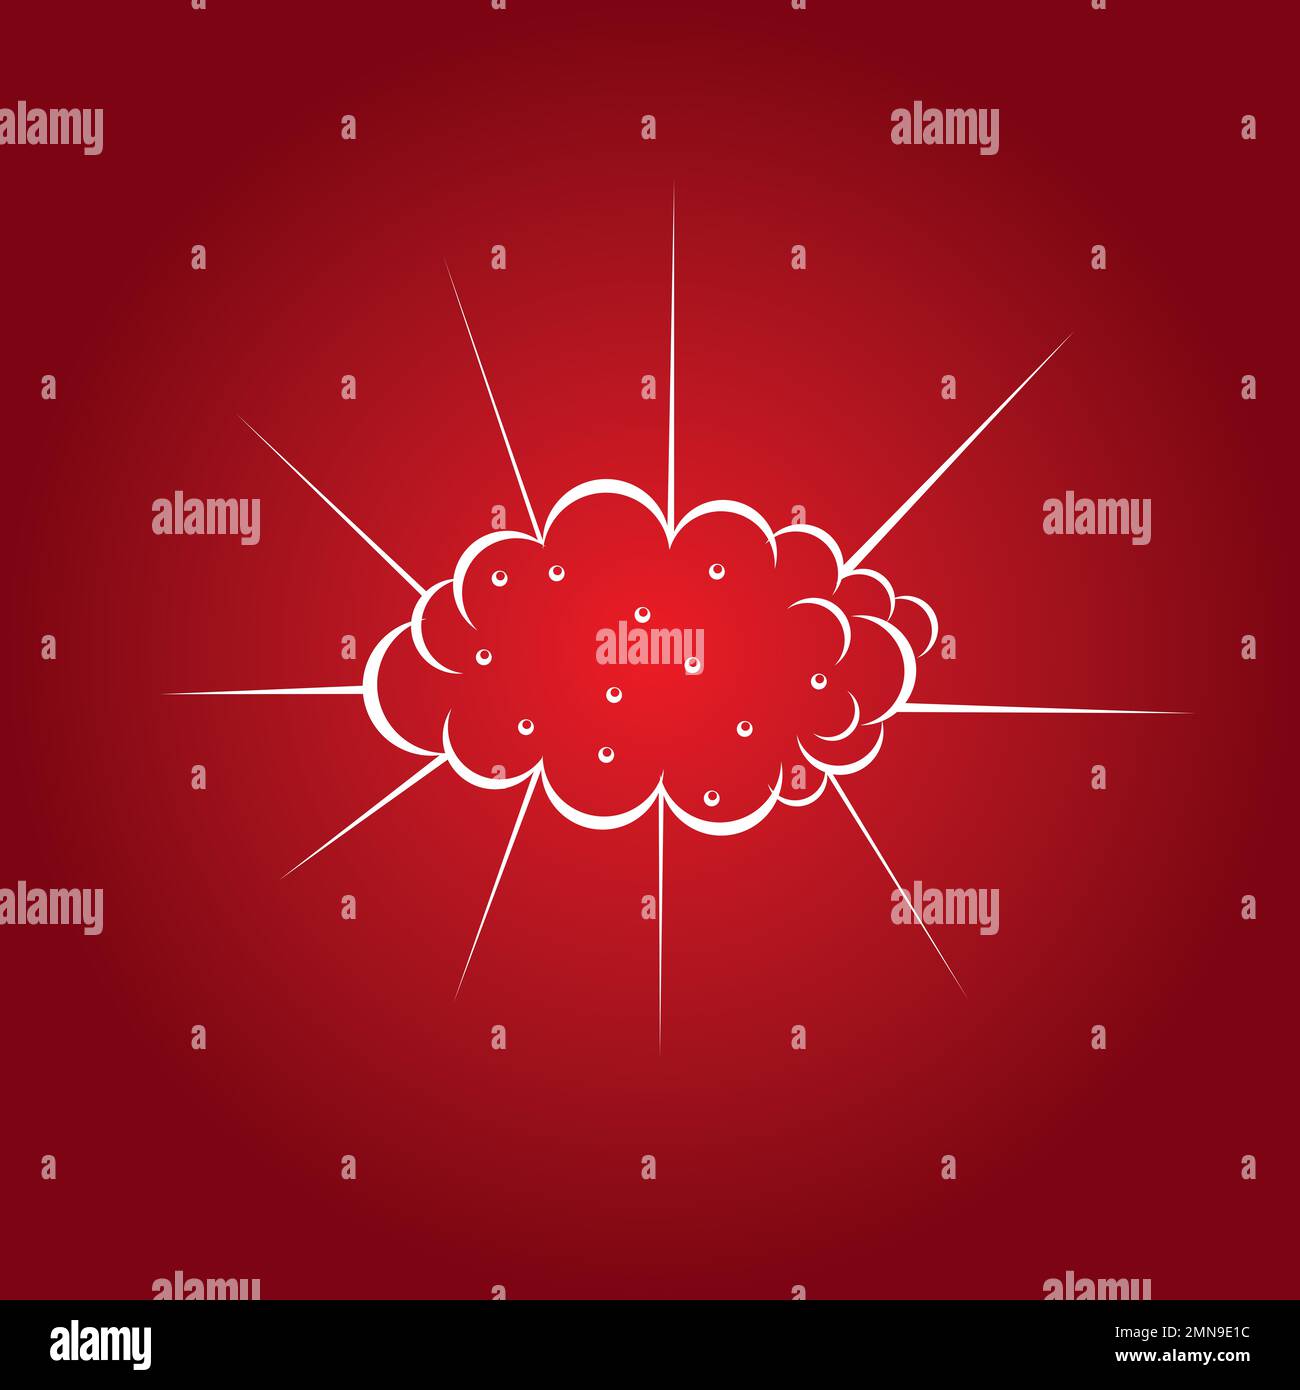 flat design bomb explosion illustration vector logo Stock Photo